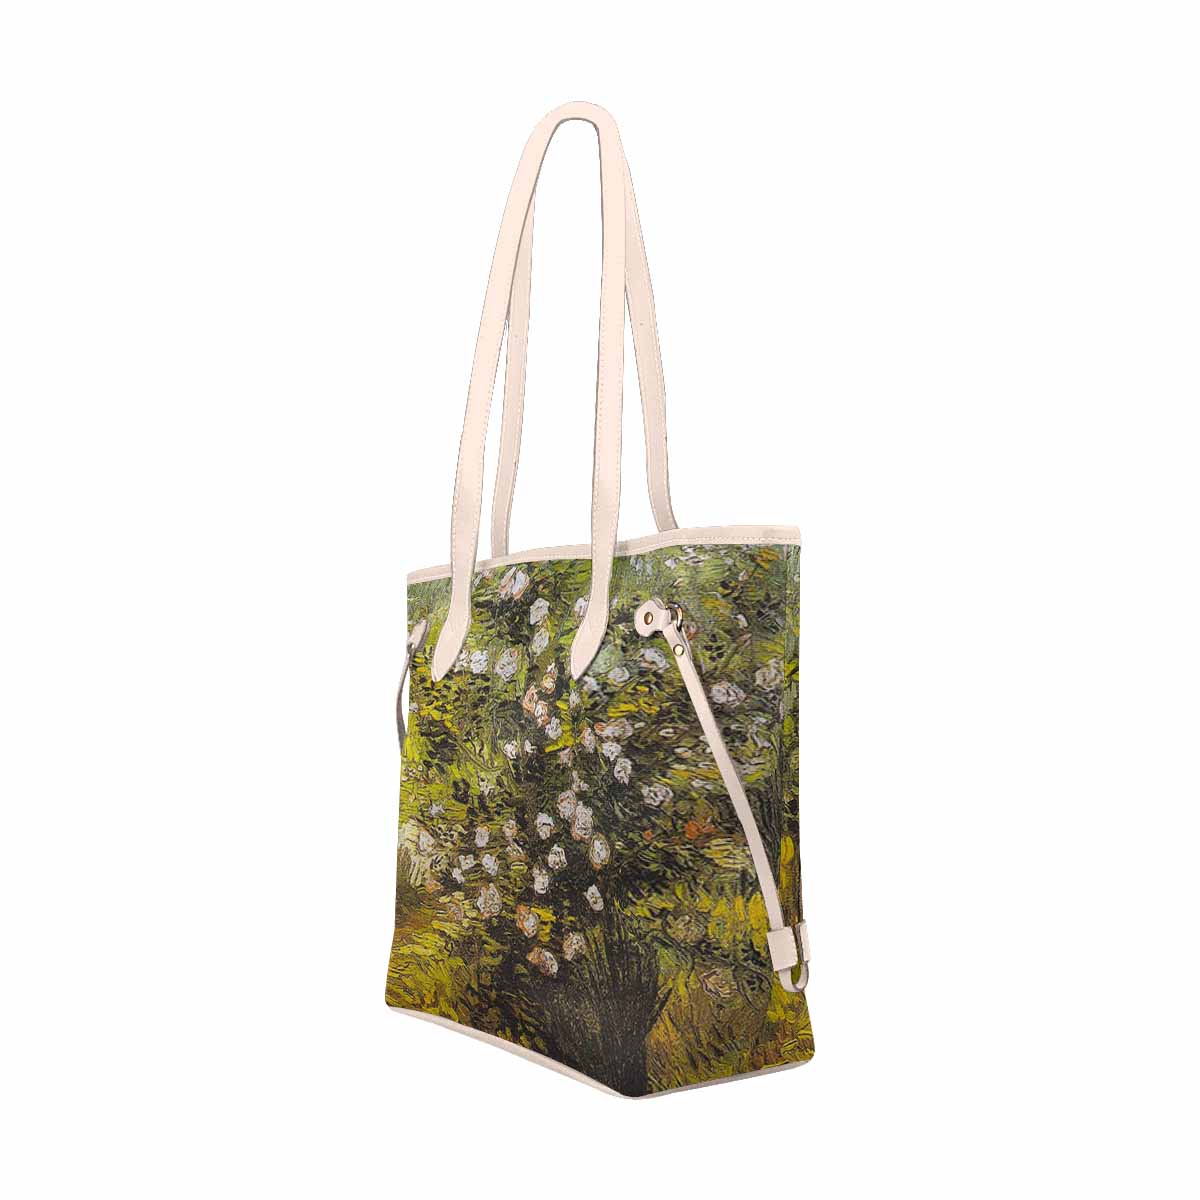 Vintage Floral Handbag, Classic Handbag, Mod 1695361 Design 05, BEIGE/TAN TRIM